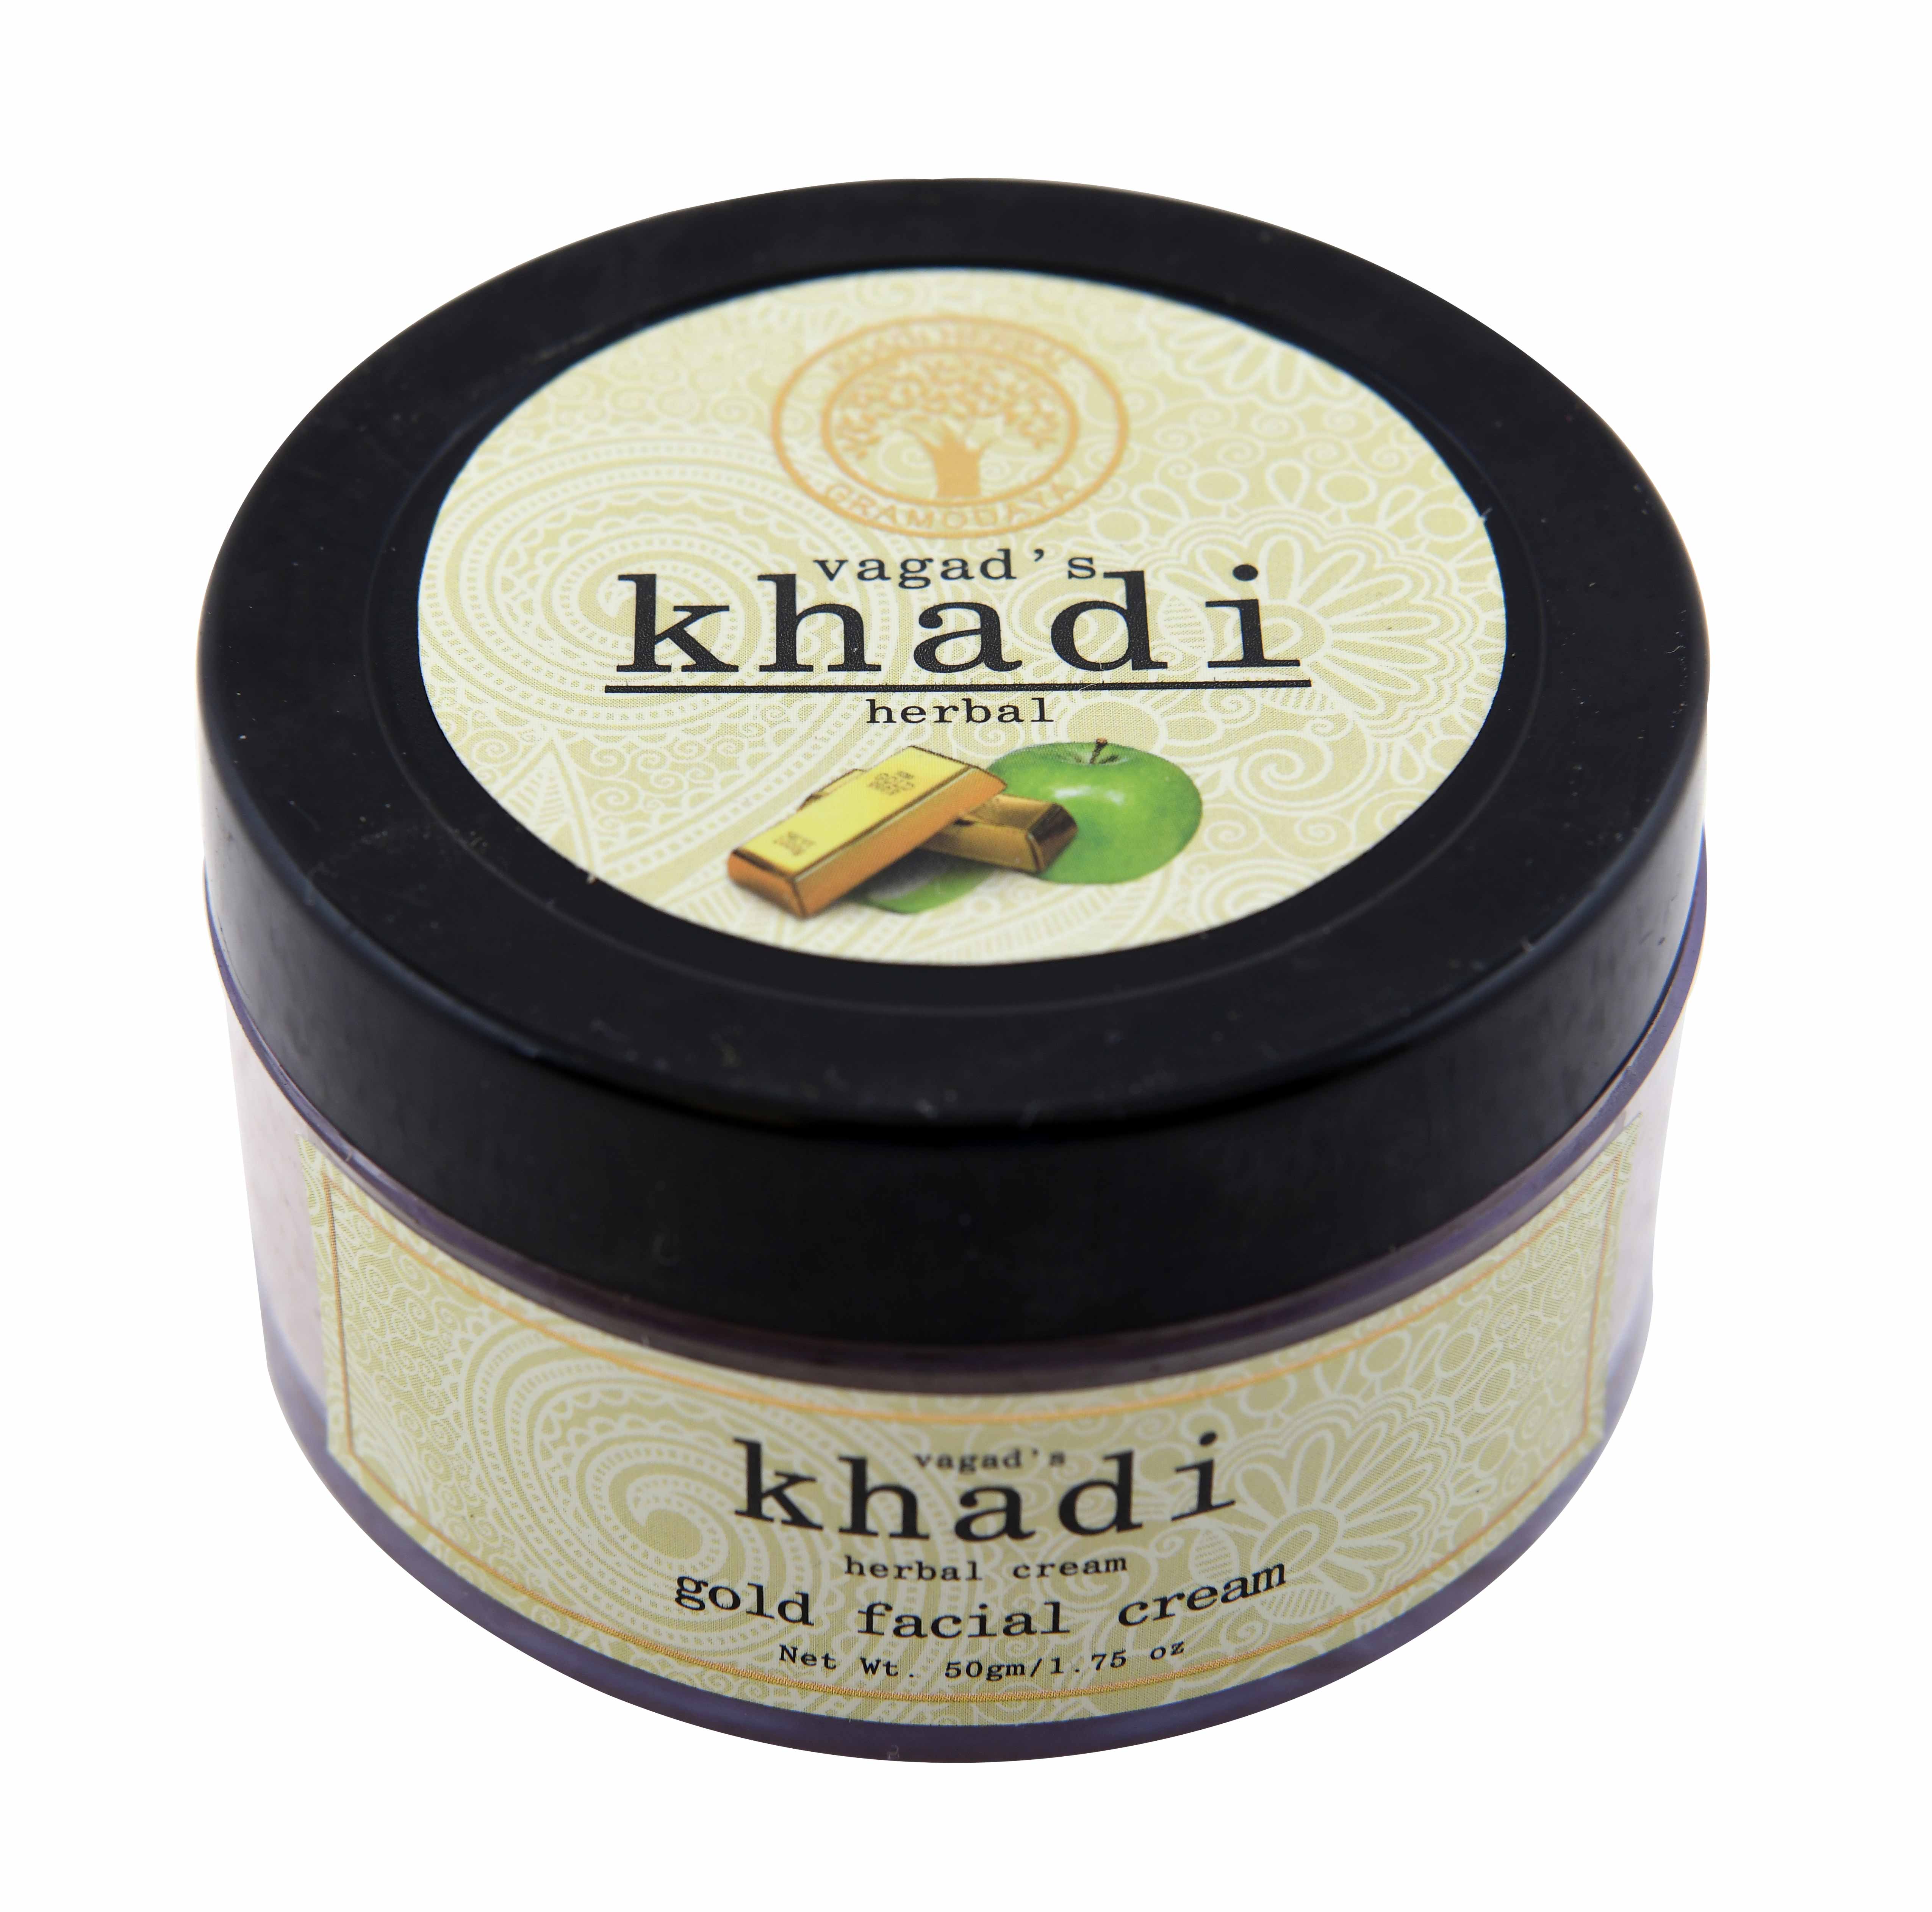 Buy Vagad's Khadi Gold Facial Cream at Best Price Online